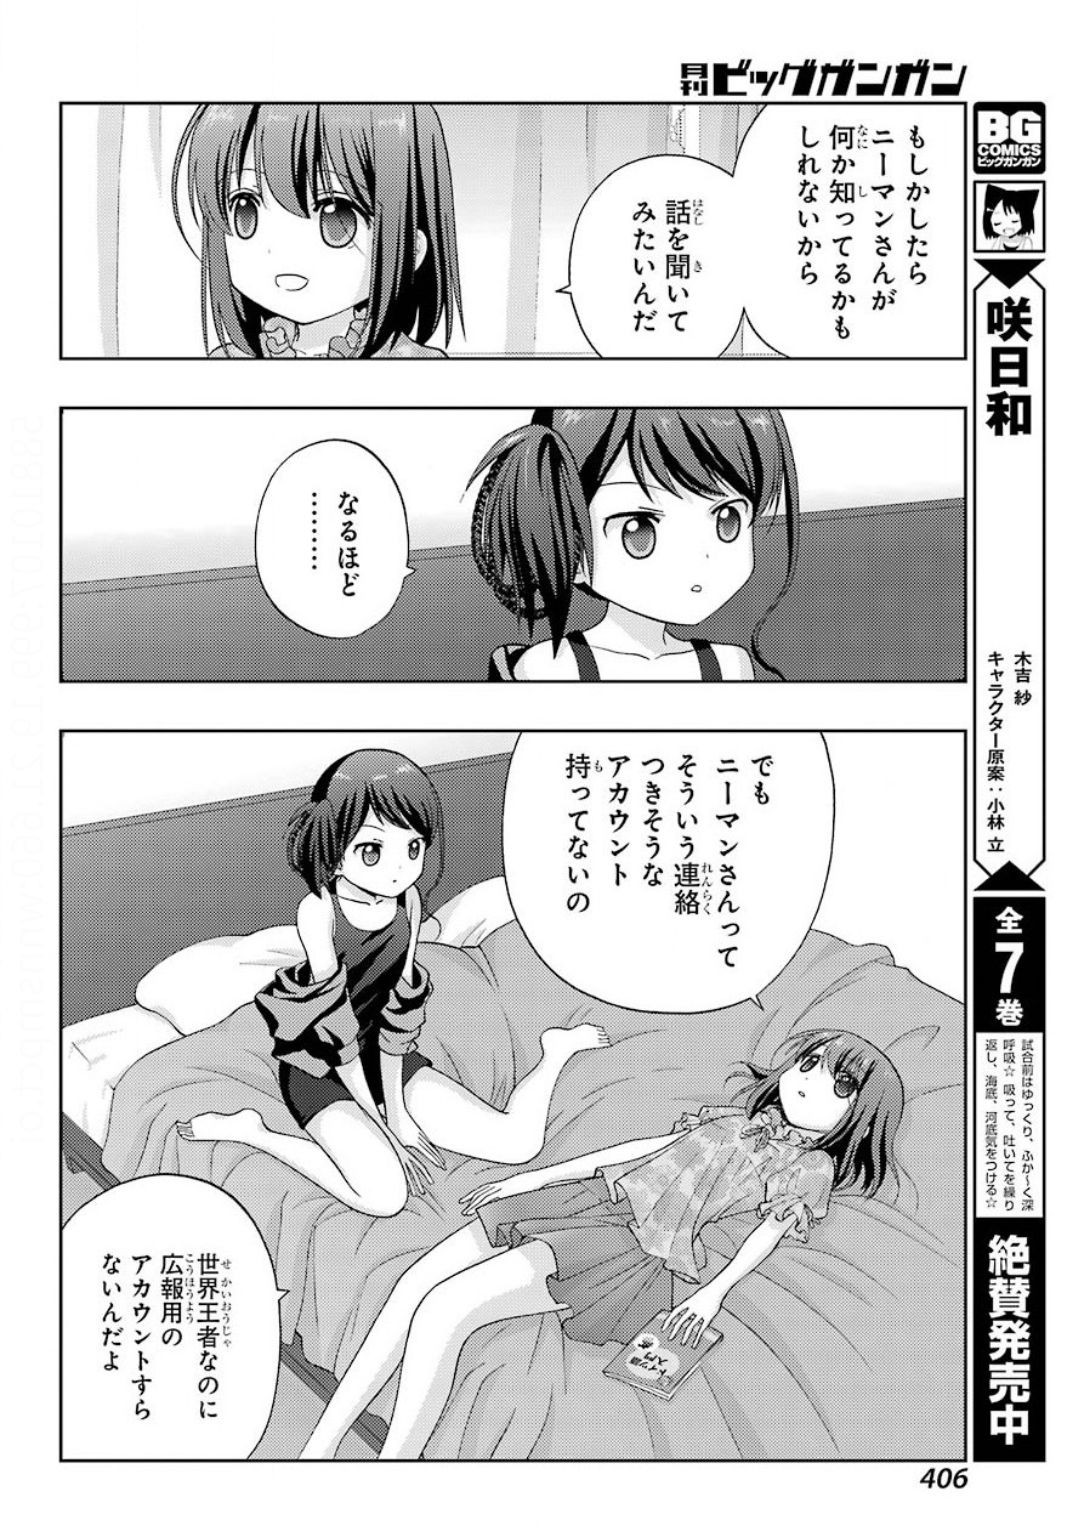 Shinohayu - The Dawn of Age Manga - Chapter 082 - Page 4